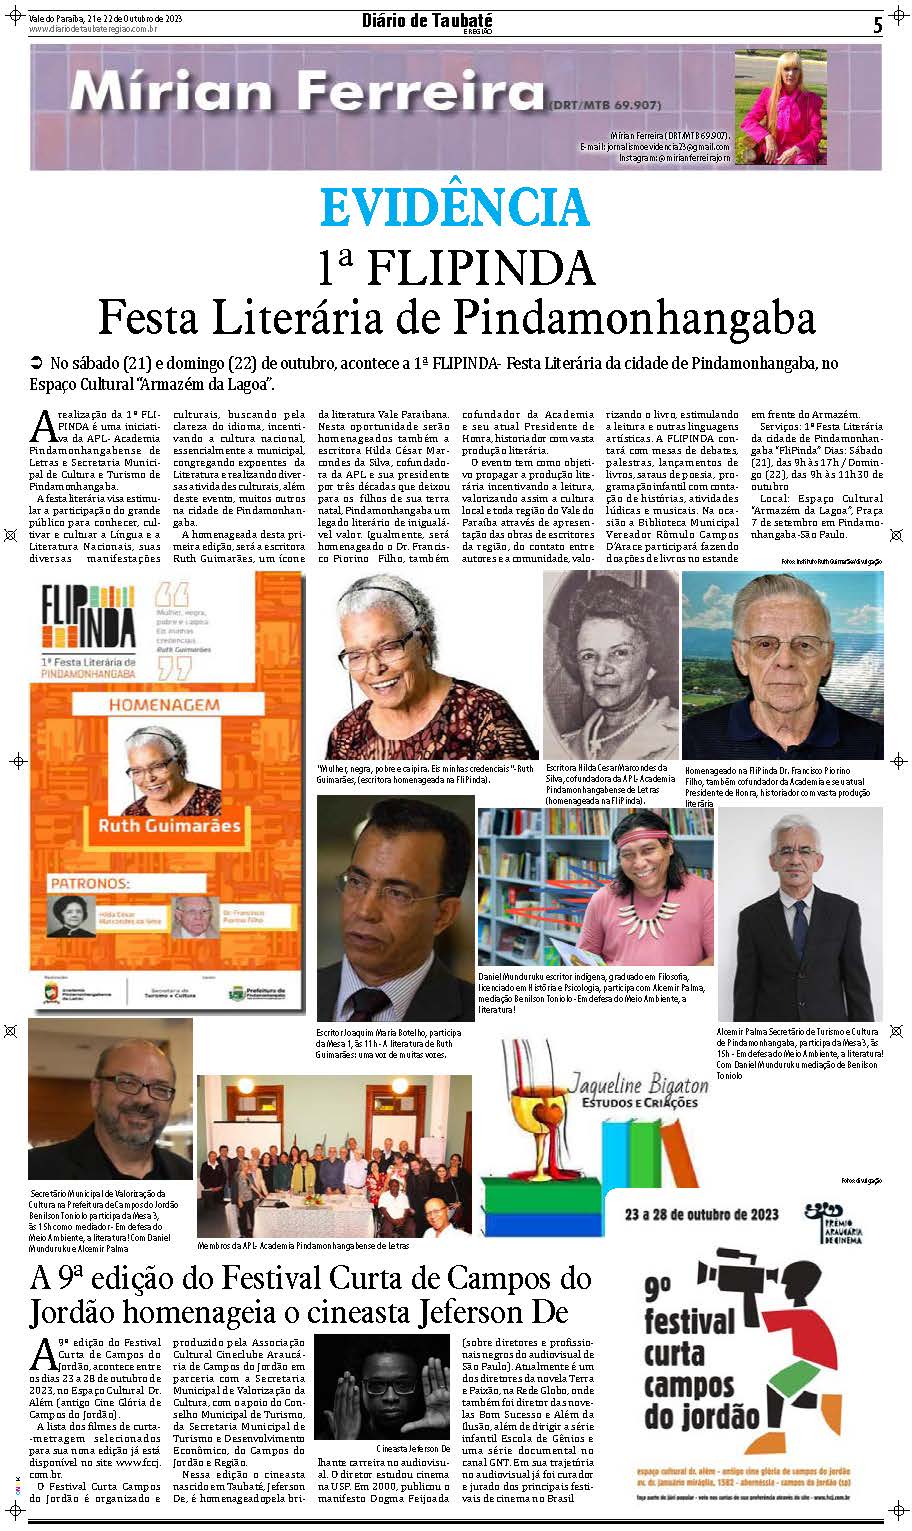 Evidência – 1ª FLIPINDA Festa Literária de Pindamonhangaba